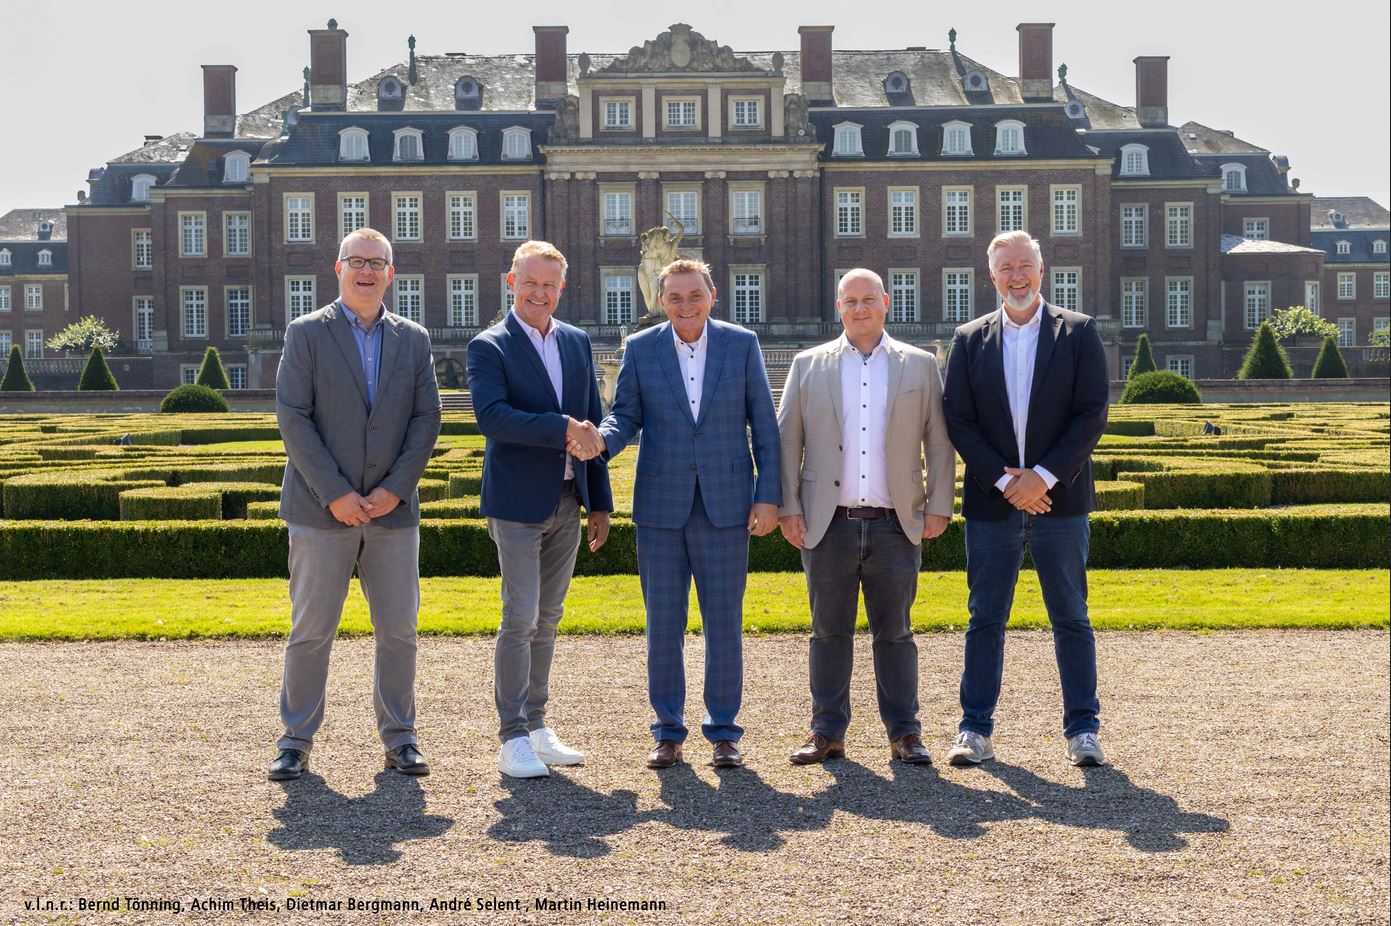 v.l.n.r.: Bernd Tönning, Achim Theis, Dietmar Bergmann, André Selent, Martin Heinemann, vor dem Schloss Nordkirchen